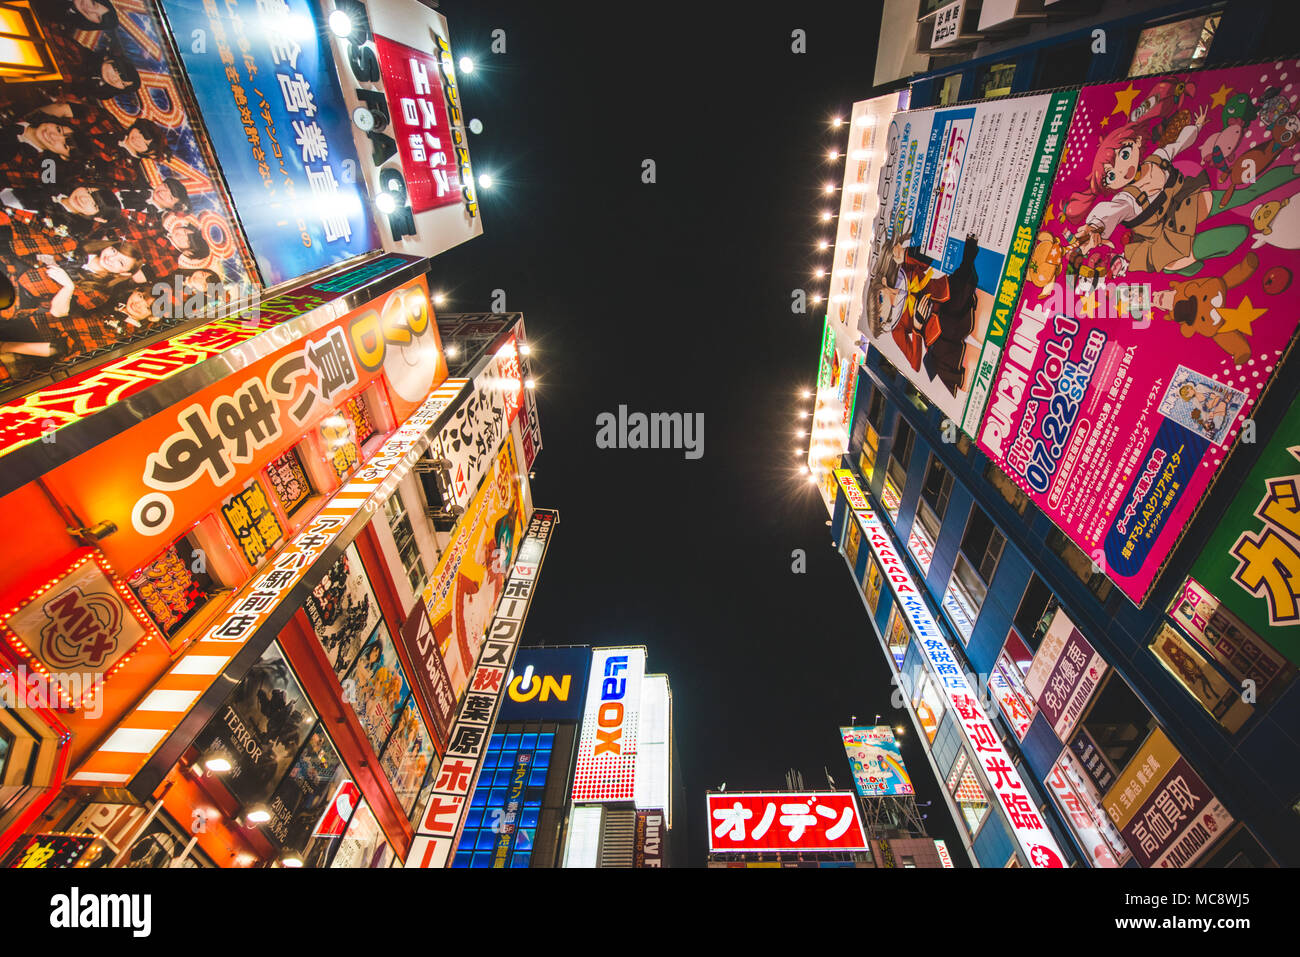 Japanische Leben, Landschaften und Tempel Foto: Alessandro Bosio/Alamy Stockfoto